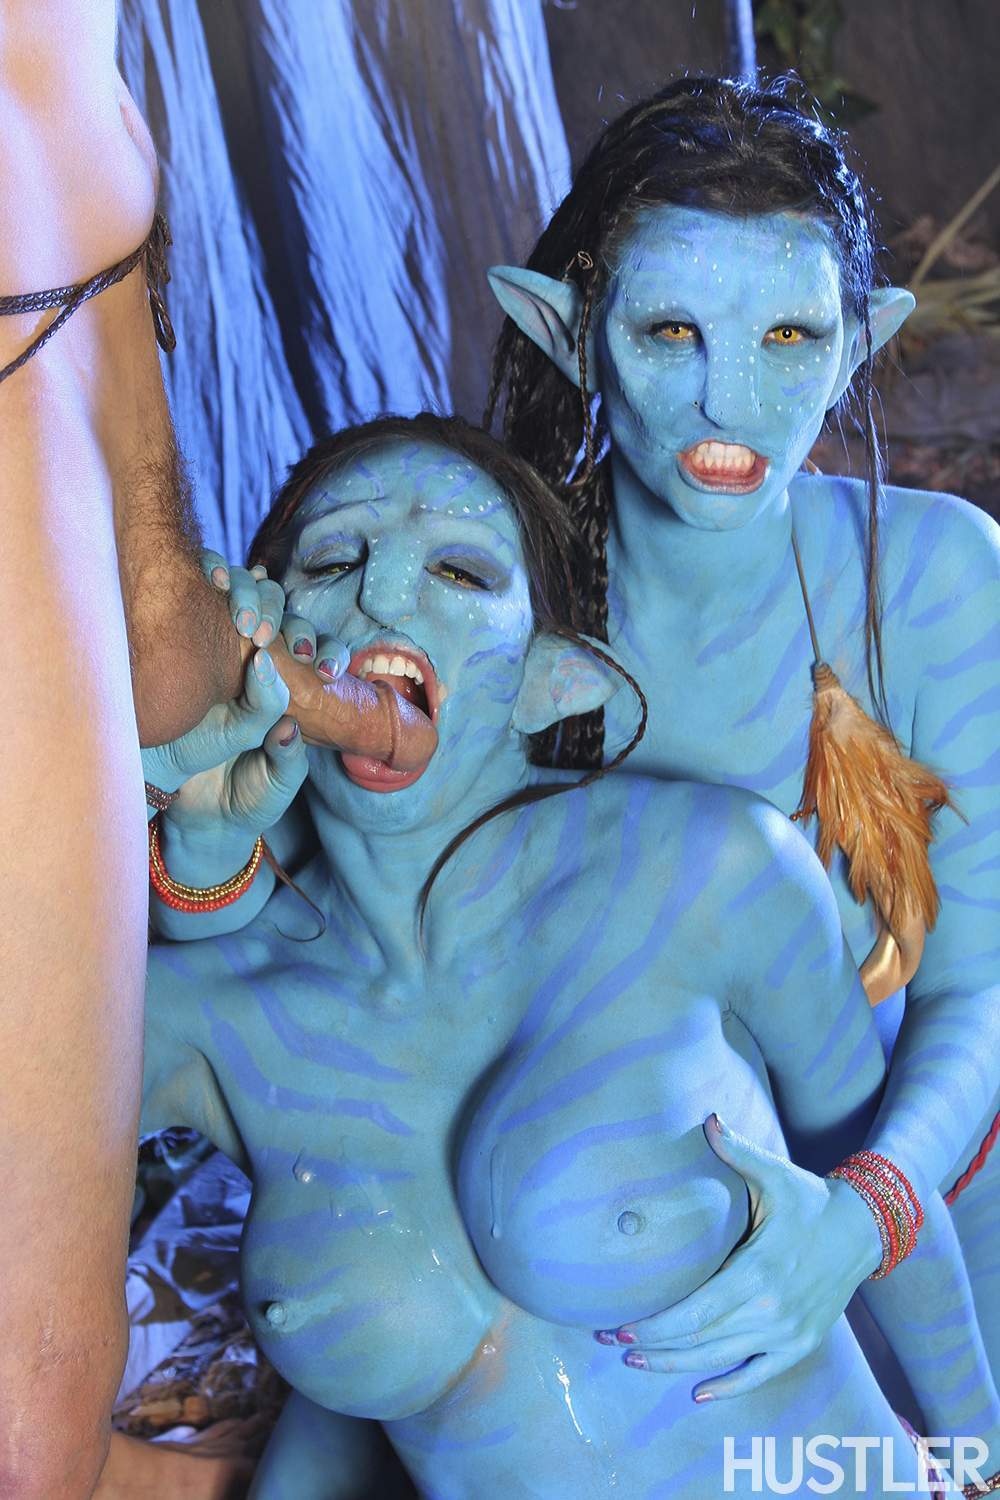 This Porn Producer Brandy Taylor Virgins Babes Avatar Porn Pics